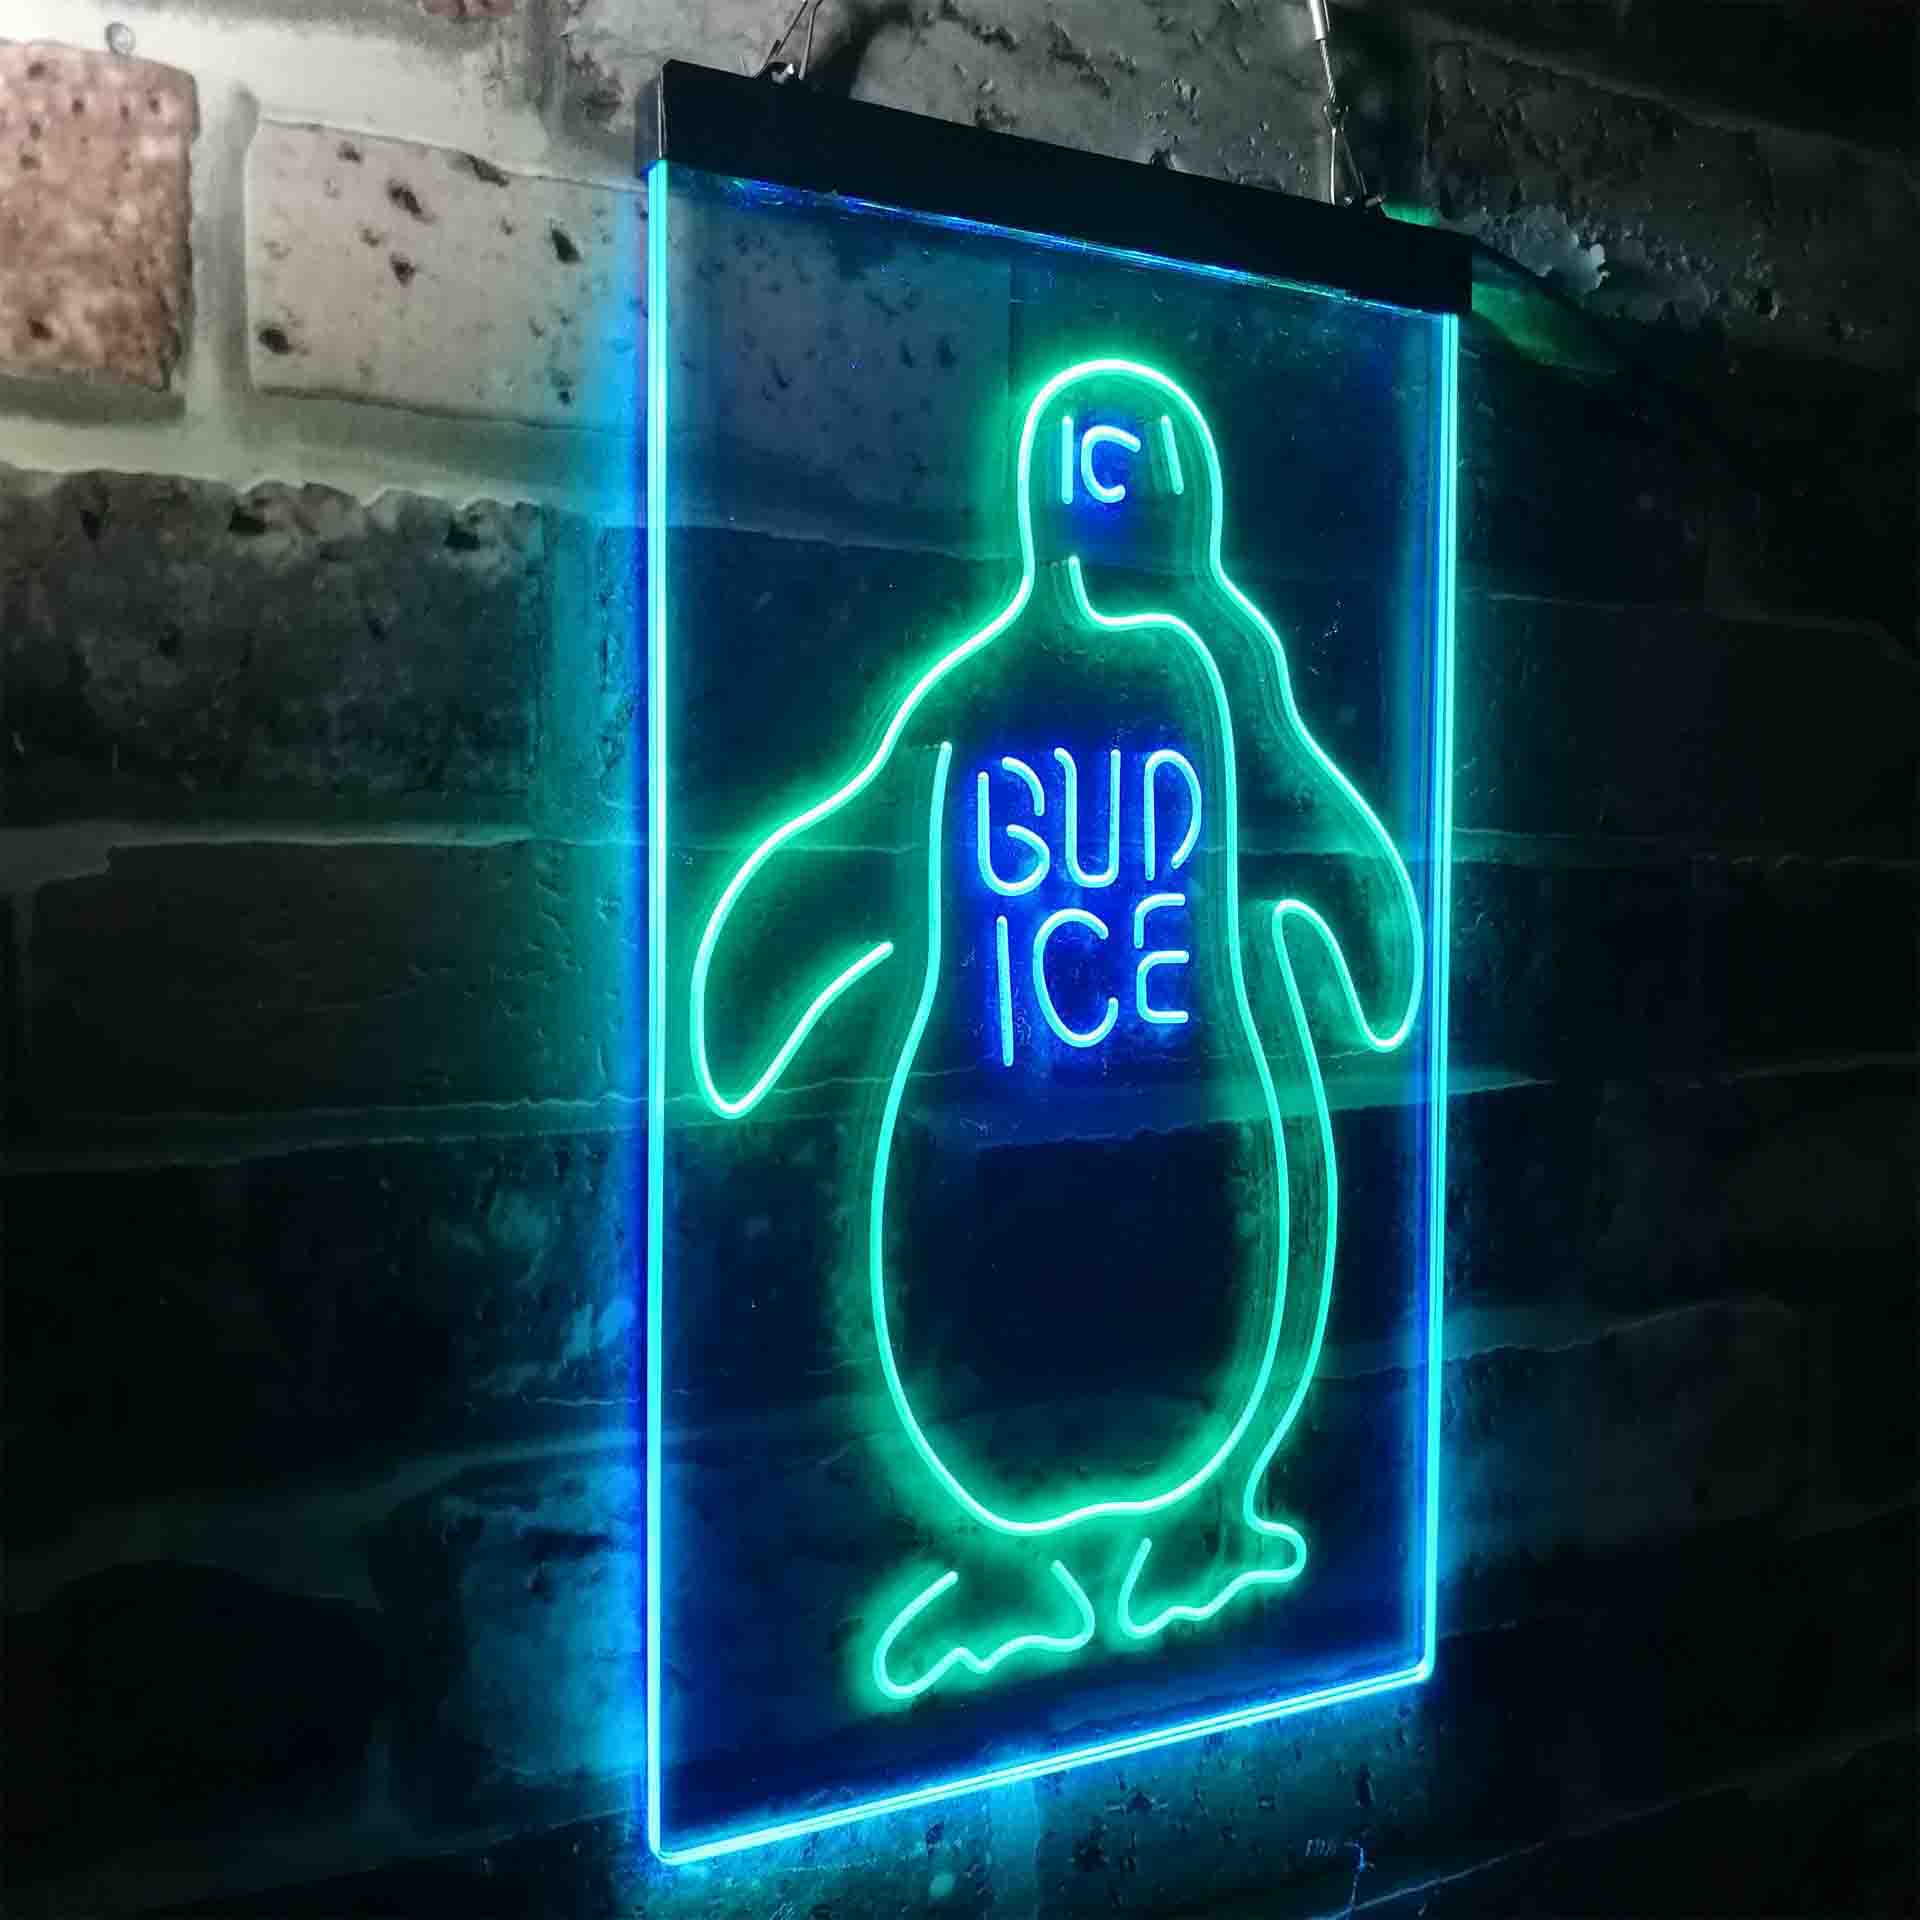 Bud Ice Penguin Beer Neon-Like LED Sign